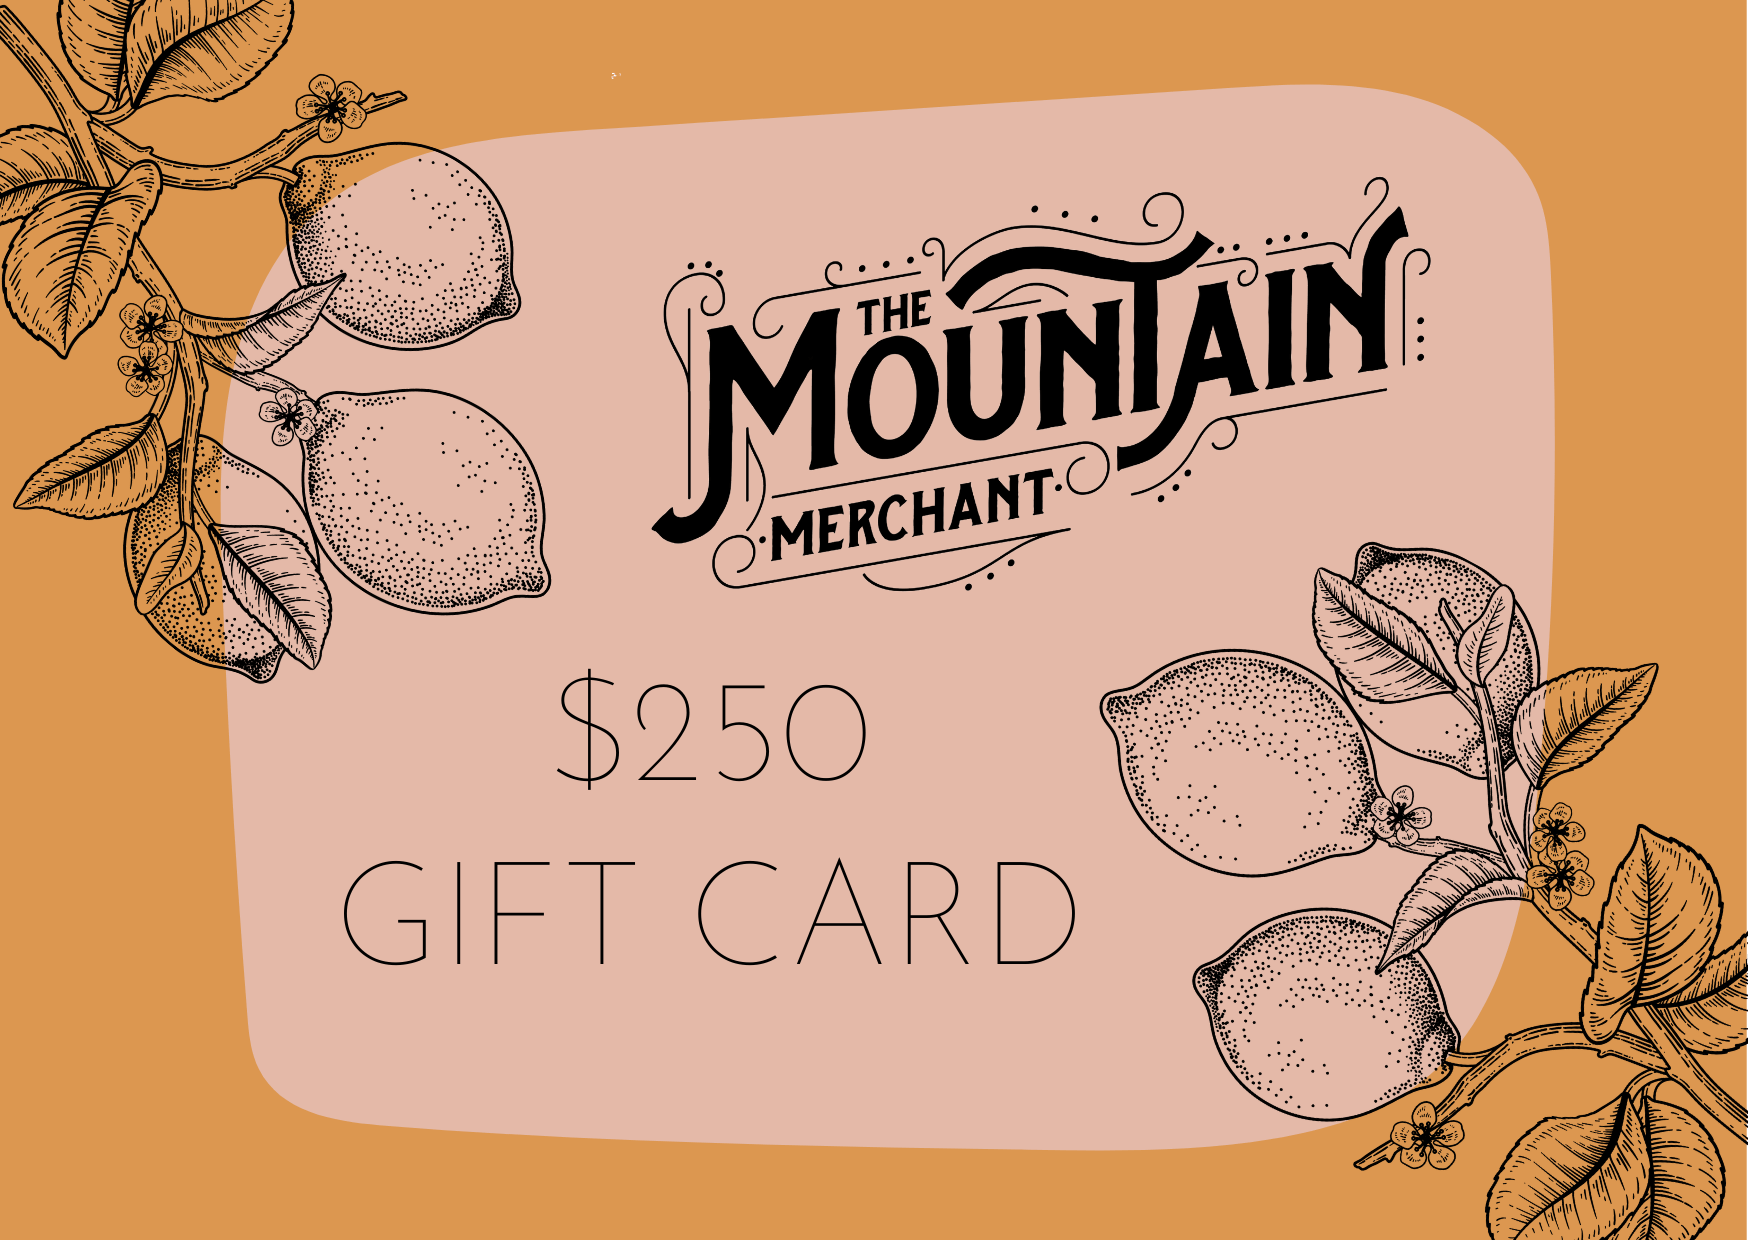 The Mountain Merchant - Gift Card $250 -The Mountain Merchant -The Mountain Merchant